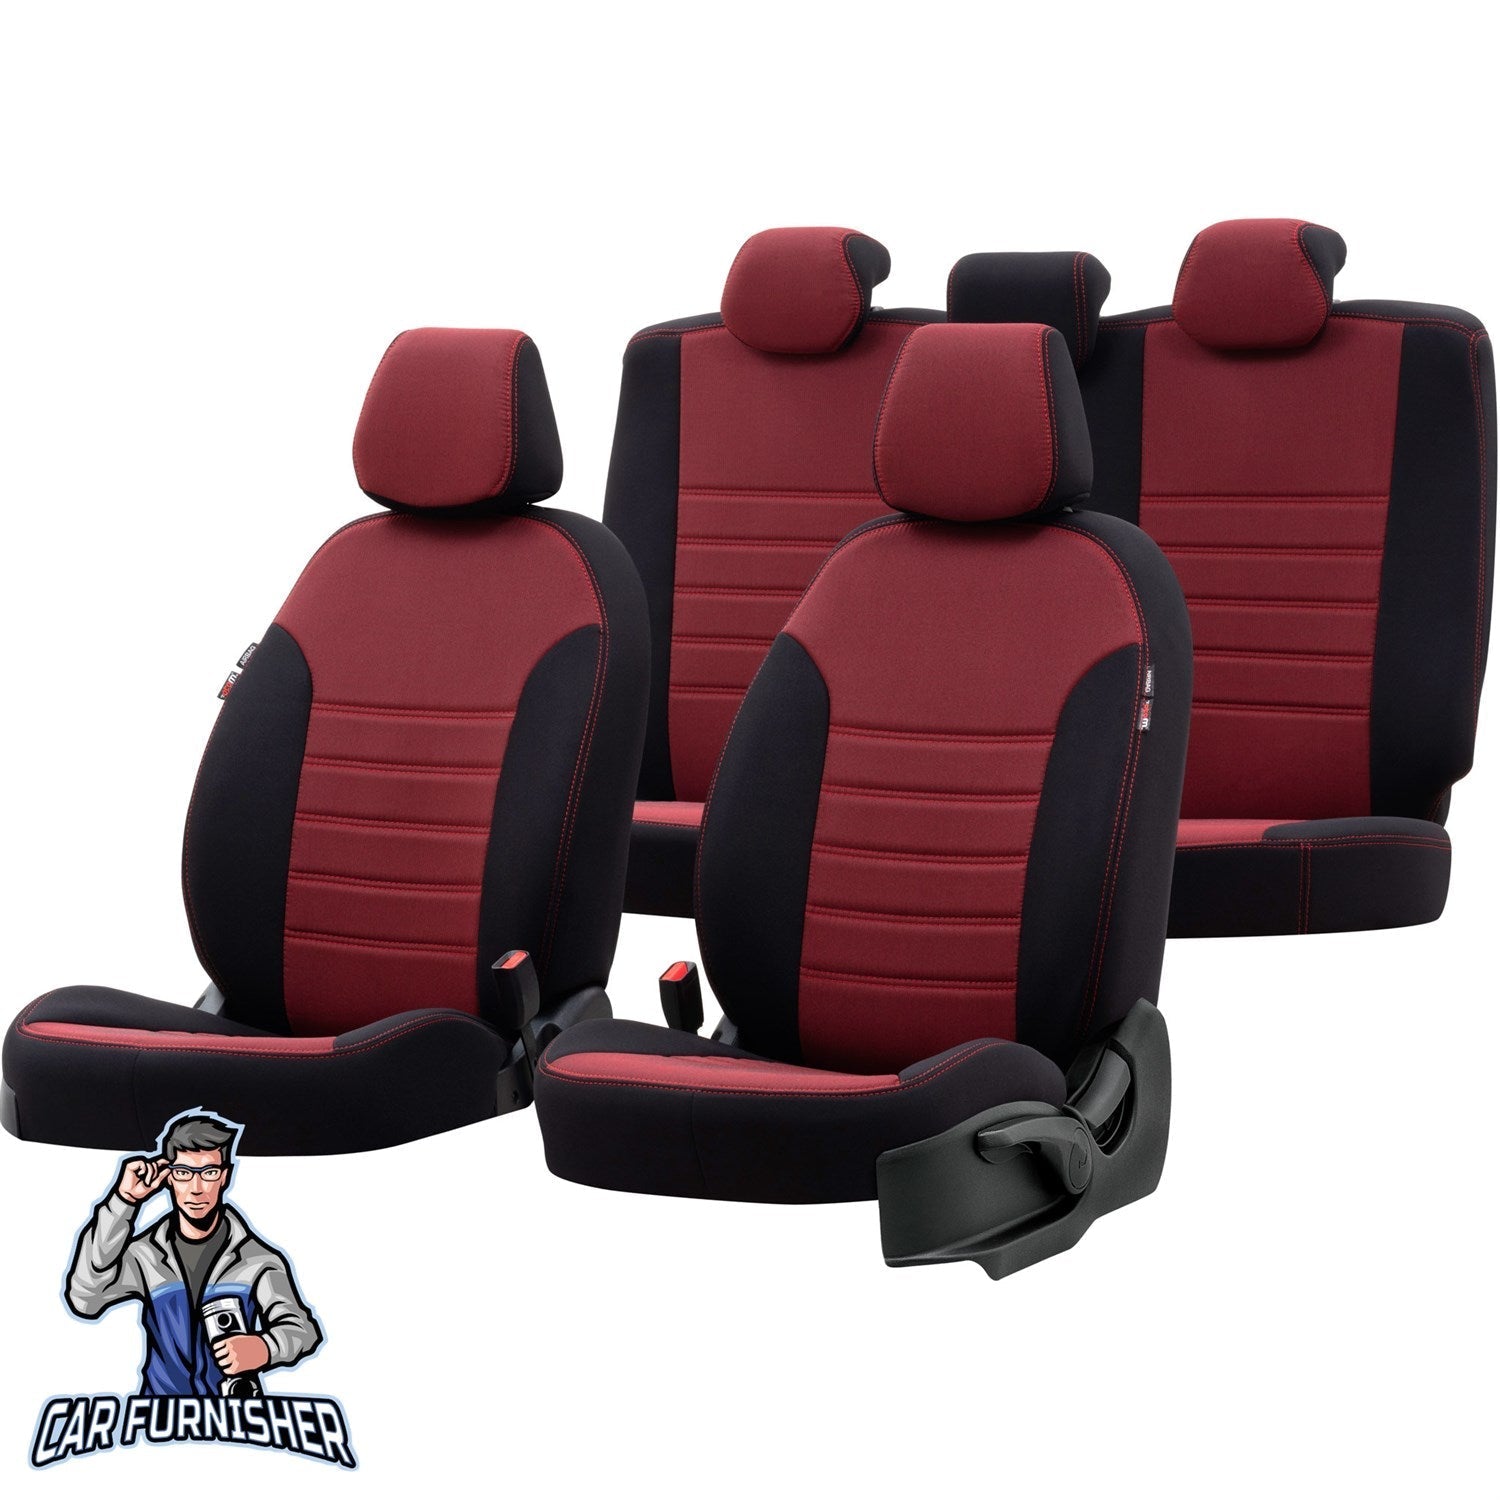 Bmw X5 Car Seat Cover 2000-2006 E53 Custom Original Design Red Full Set (5 Seats + Handrest) Fabric